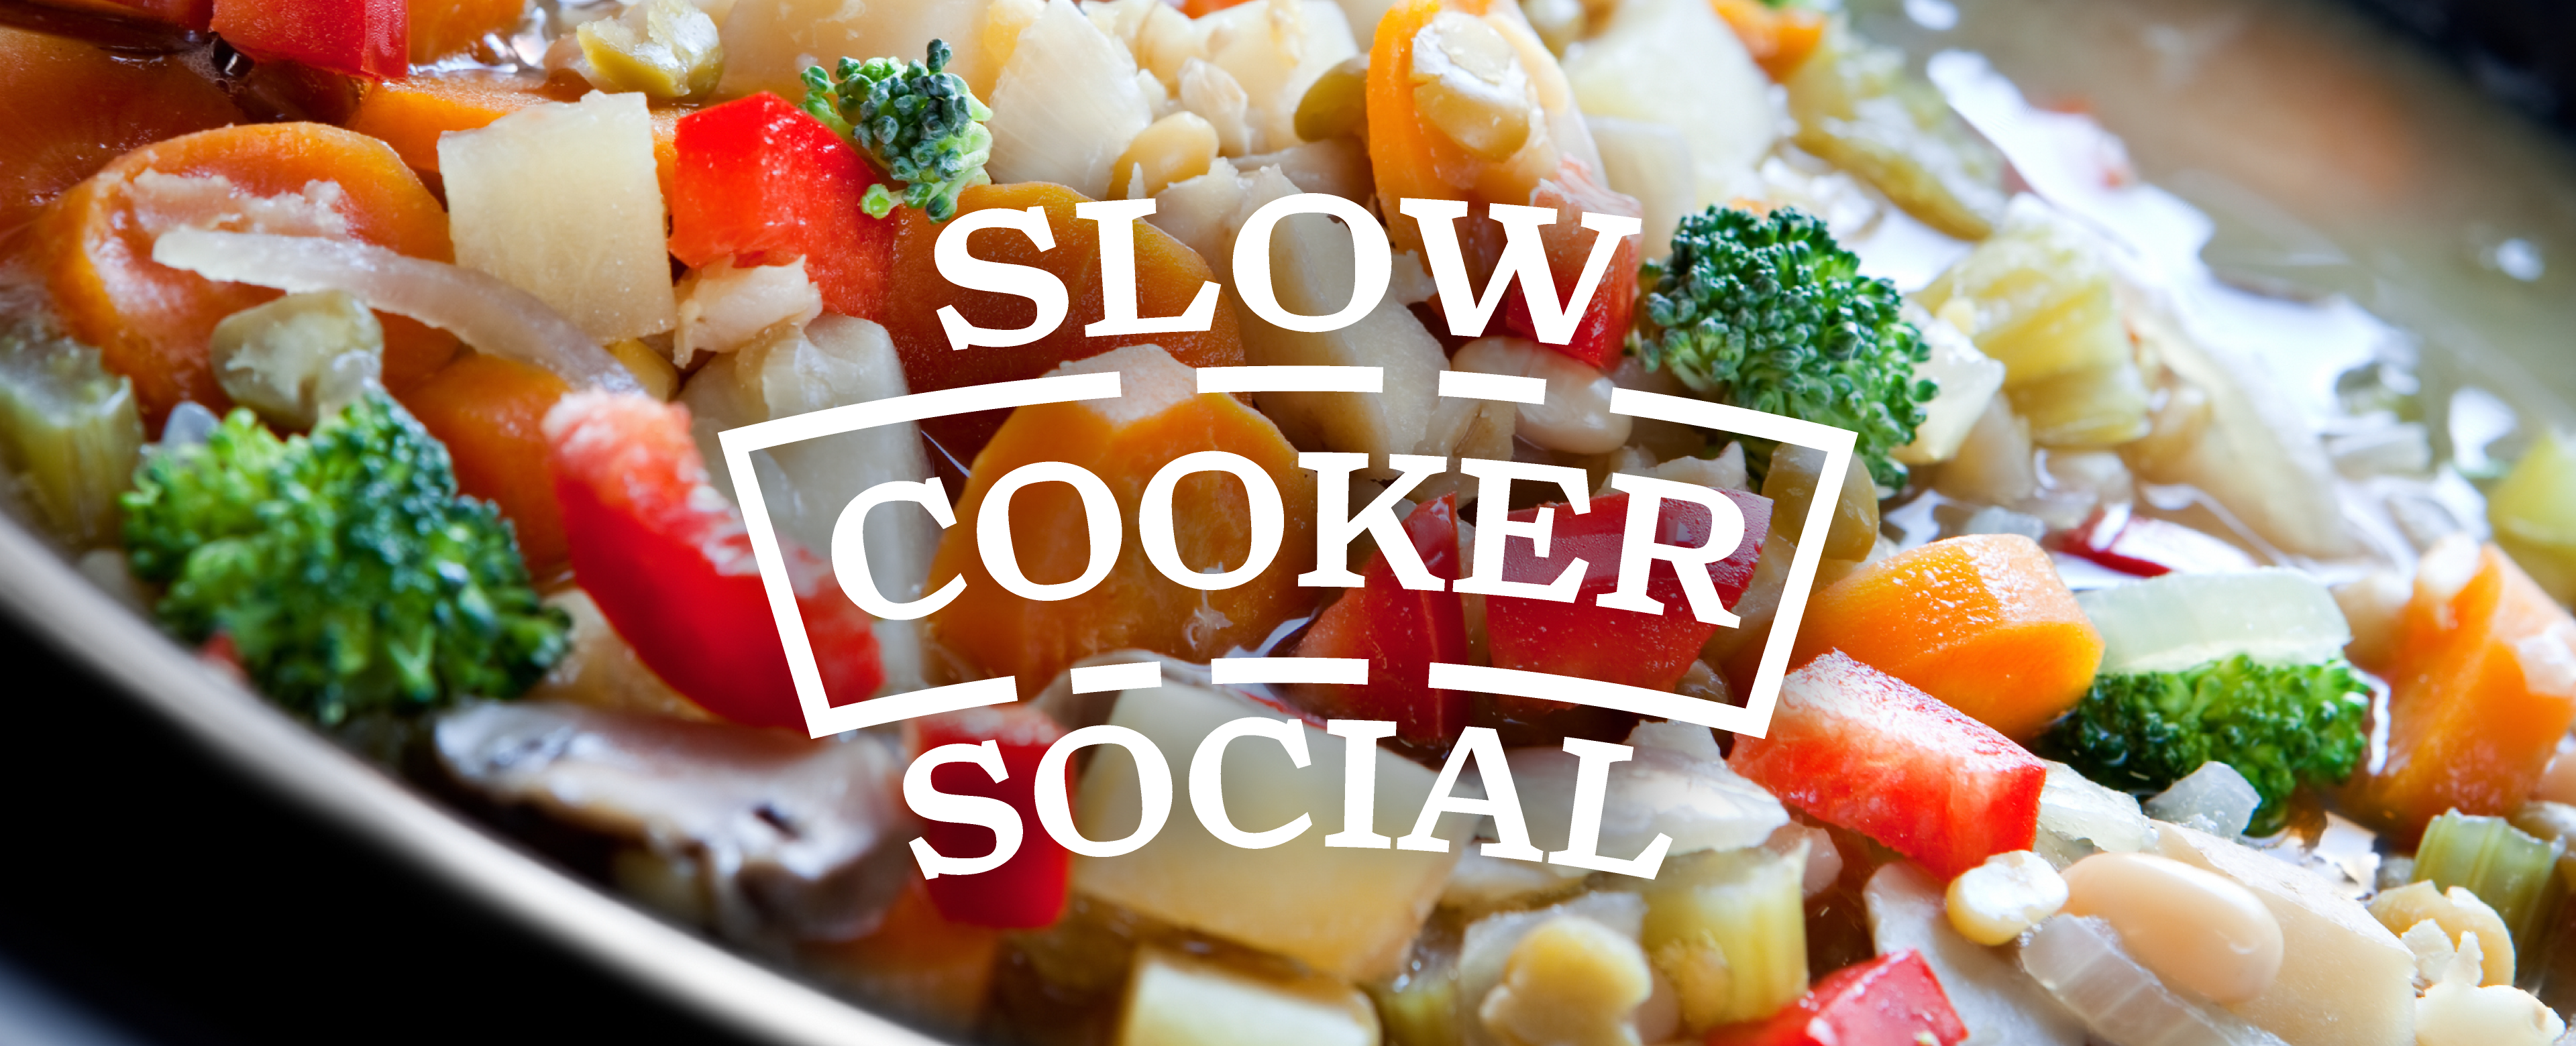 slow cooker social